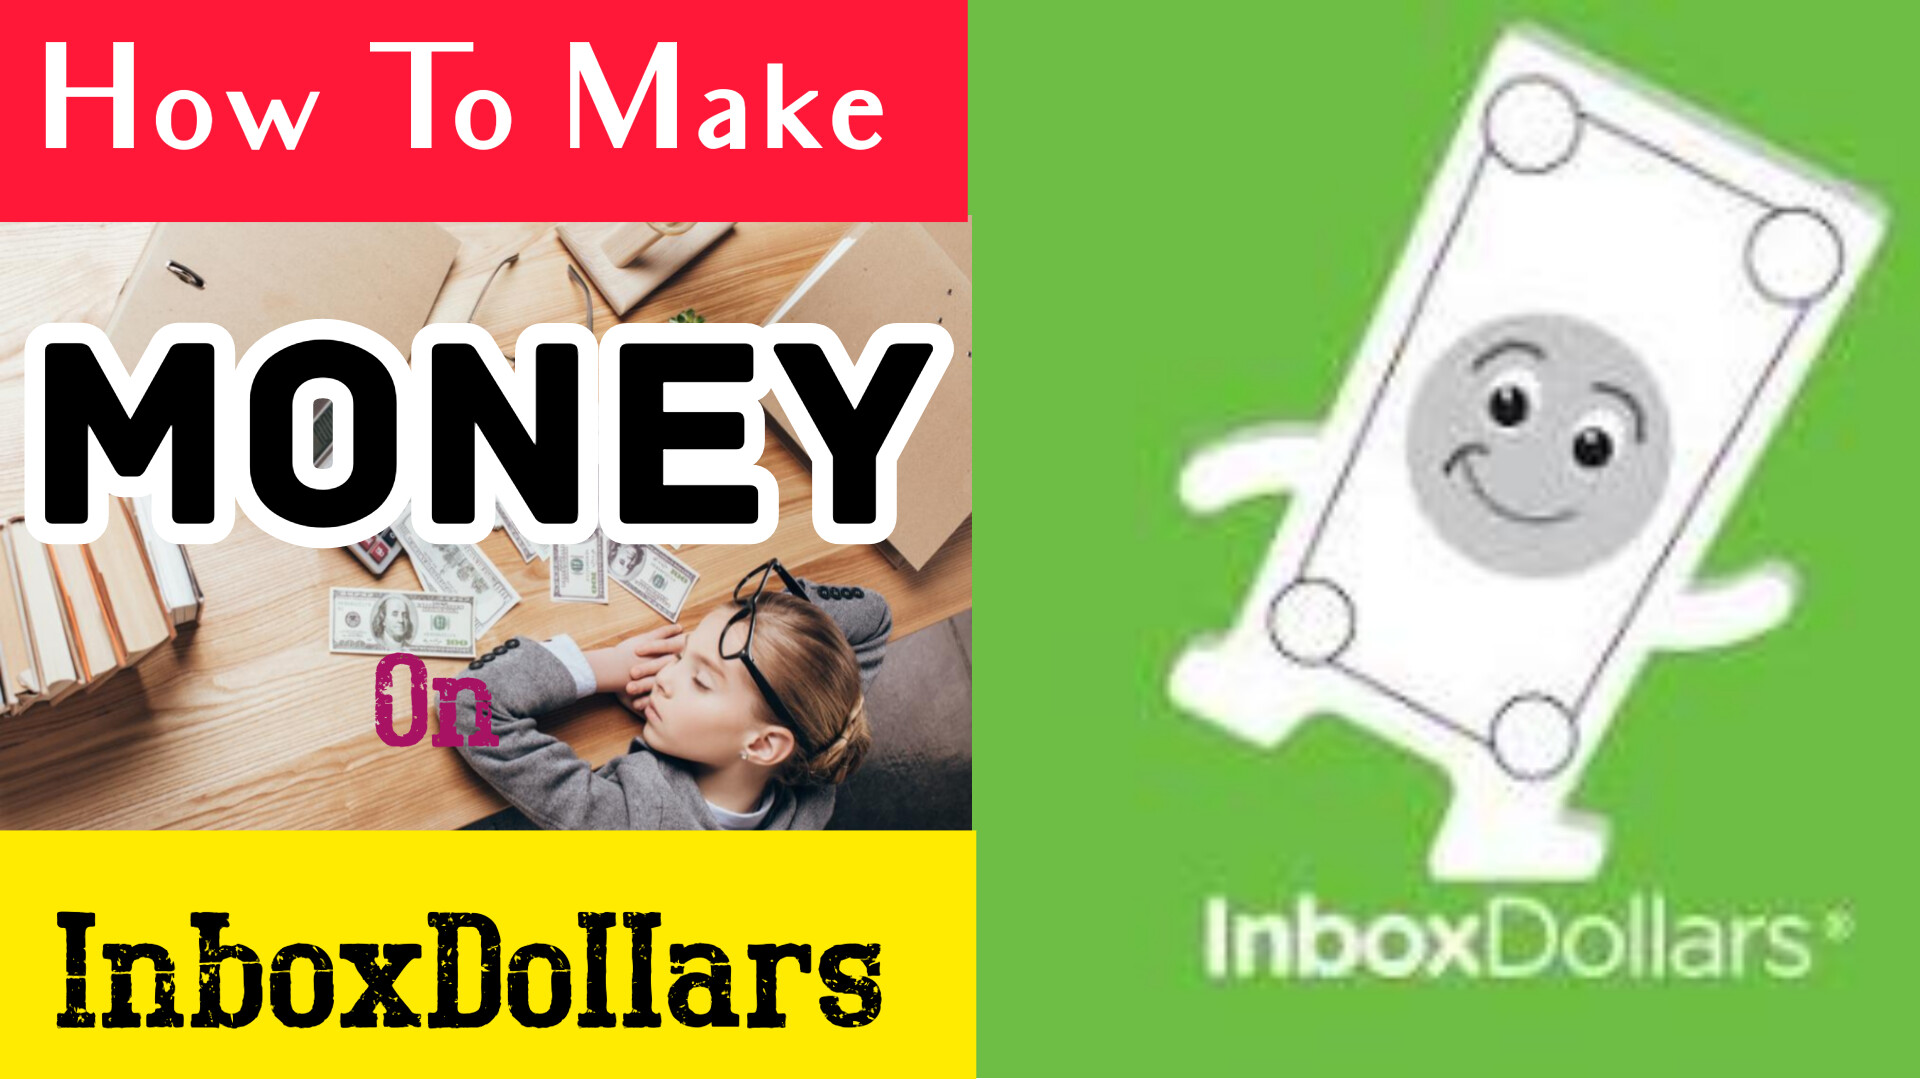 Inbox Dollar’s | Inboxdollars Earn Money | How To Make Money On Inbox Dollars